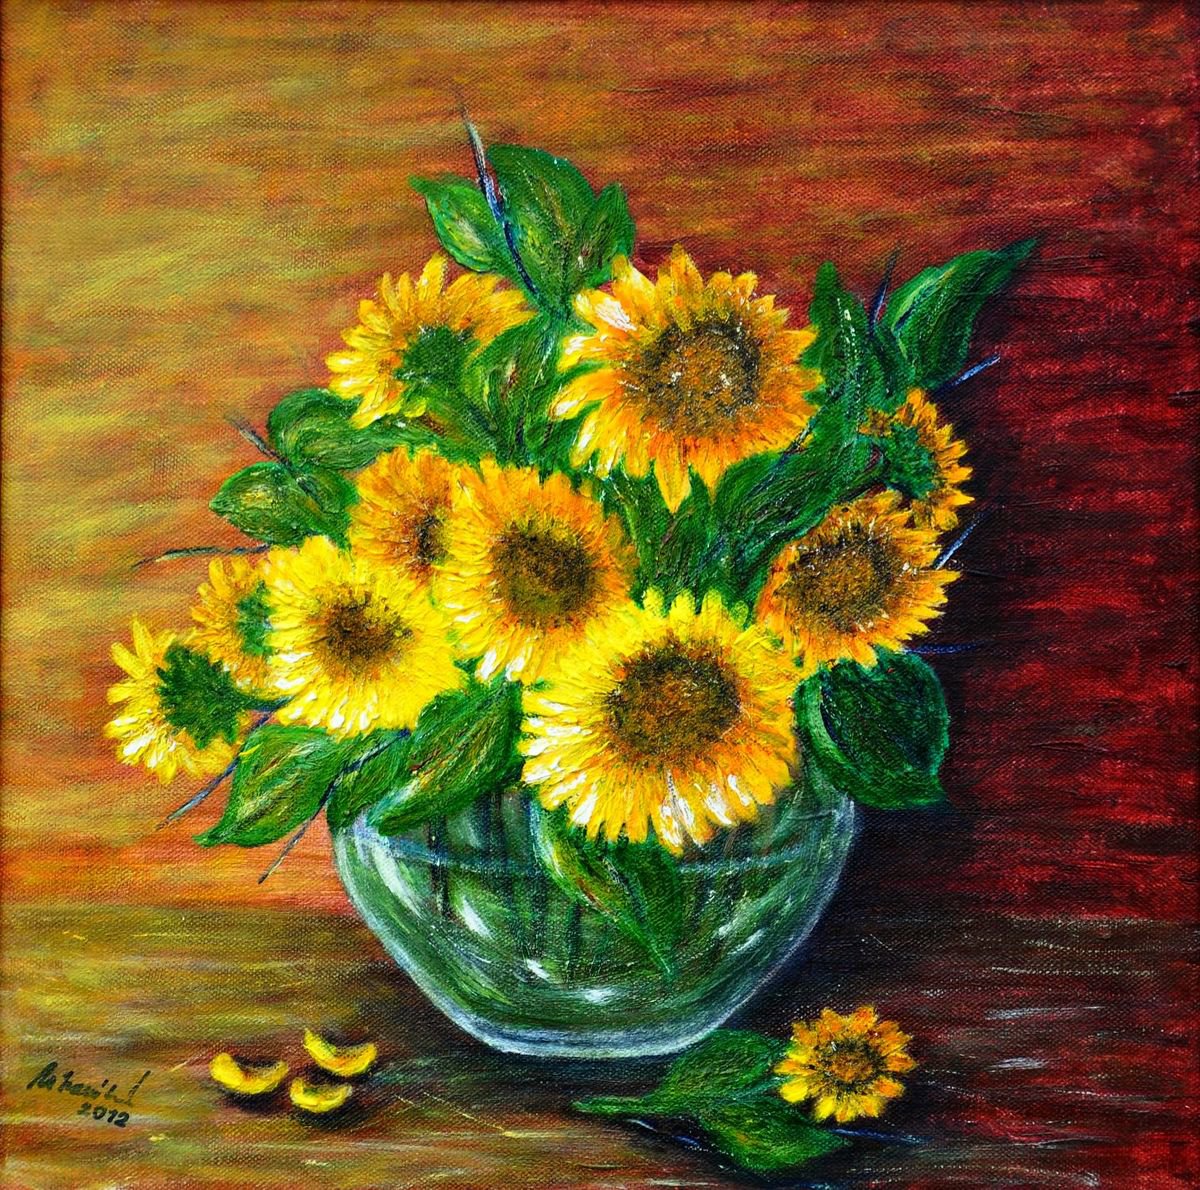 Still life - Sunflower .. by Em�lia Urban�kov�